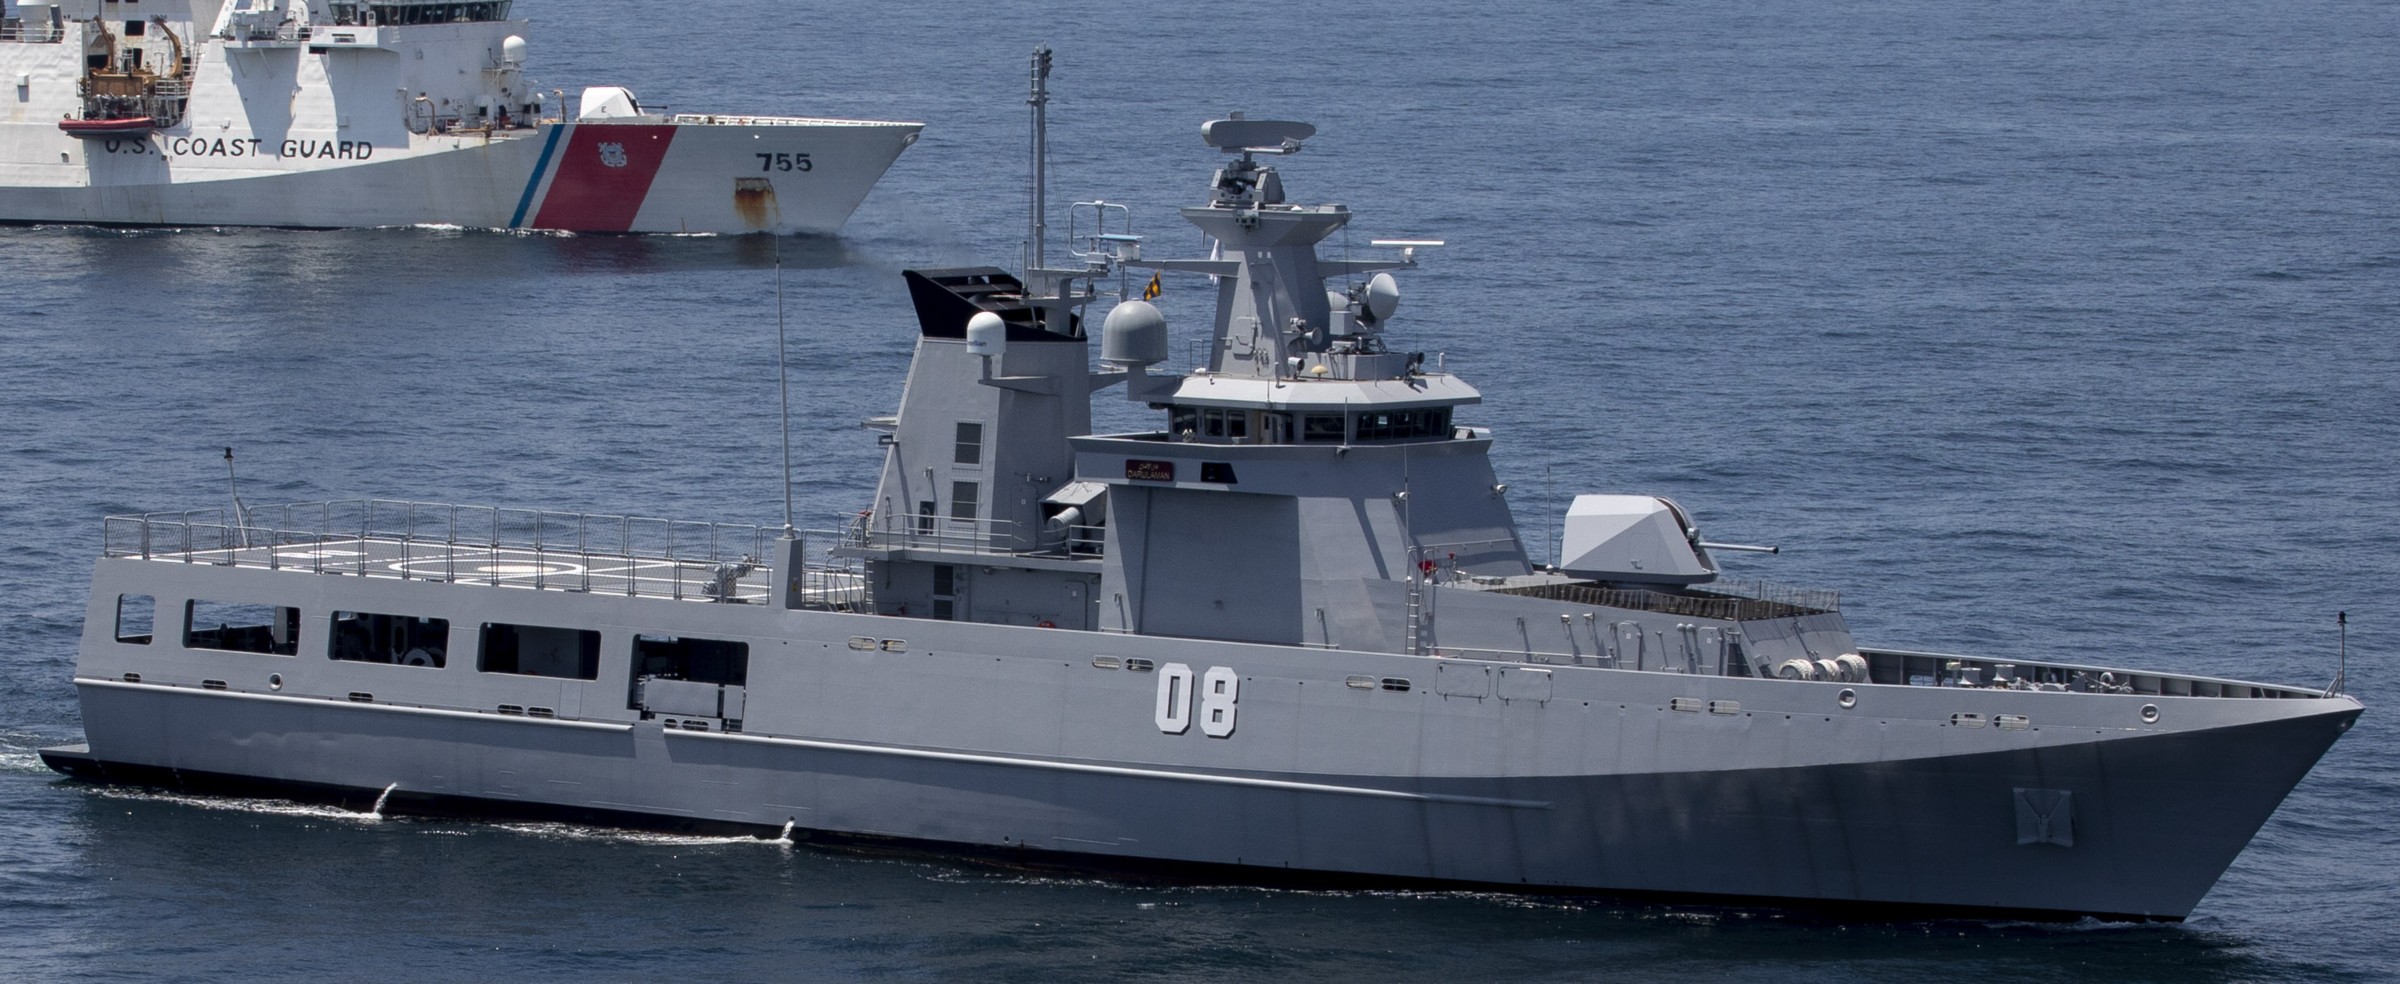 opv 08 kdb darulaman offshore patrol vessel darussalem class royal brunei navy 09